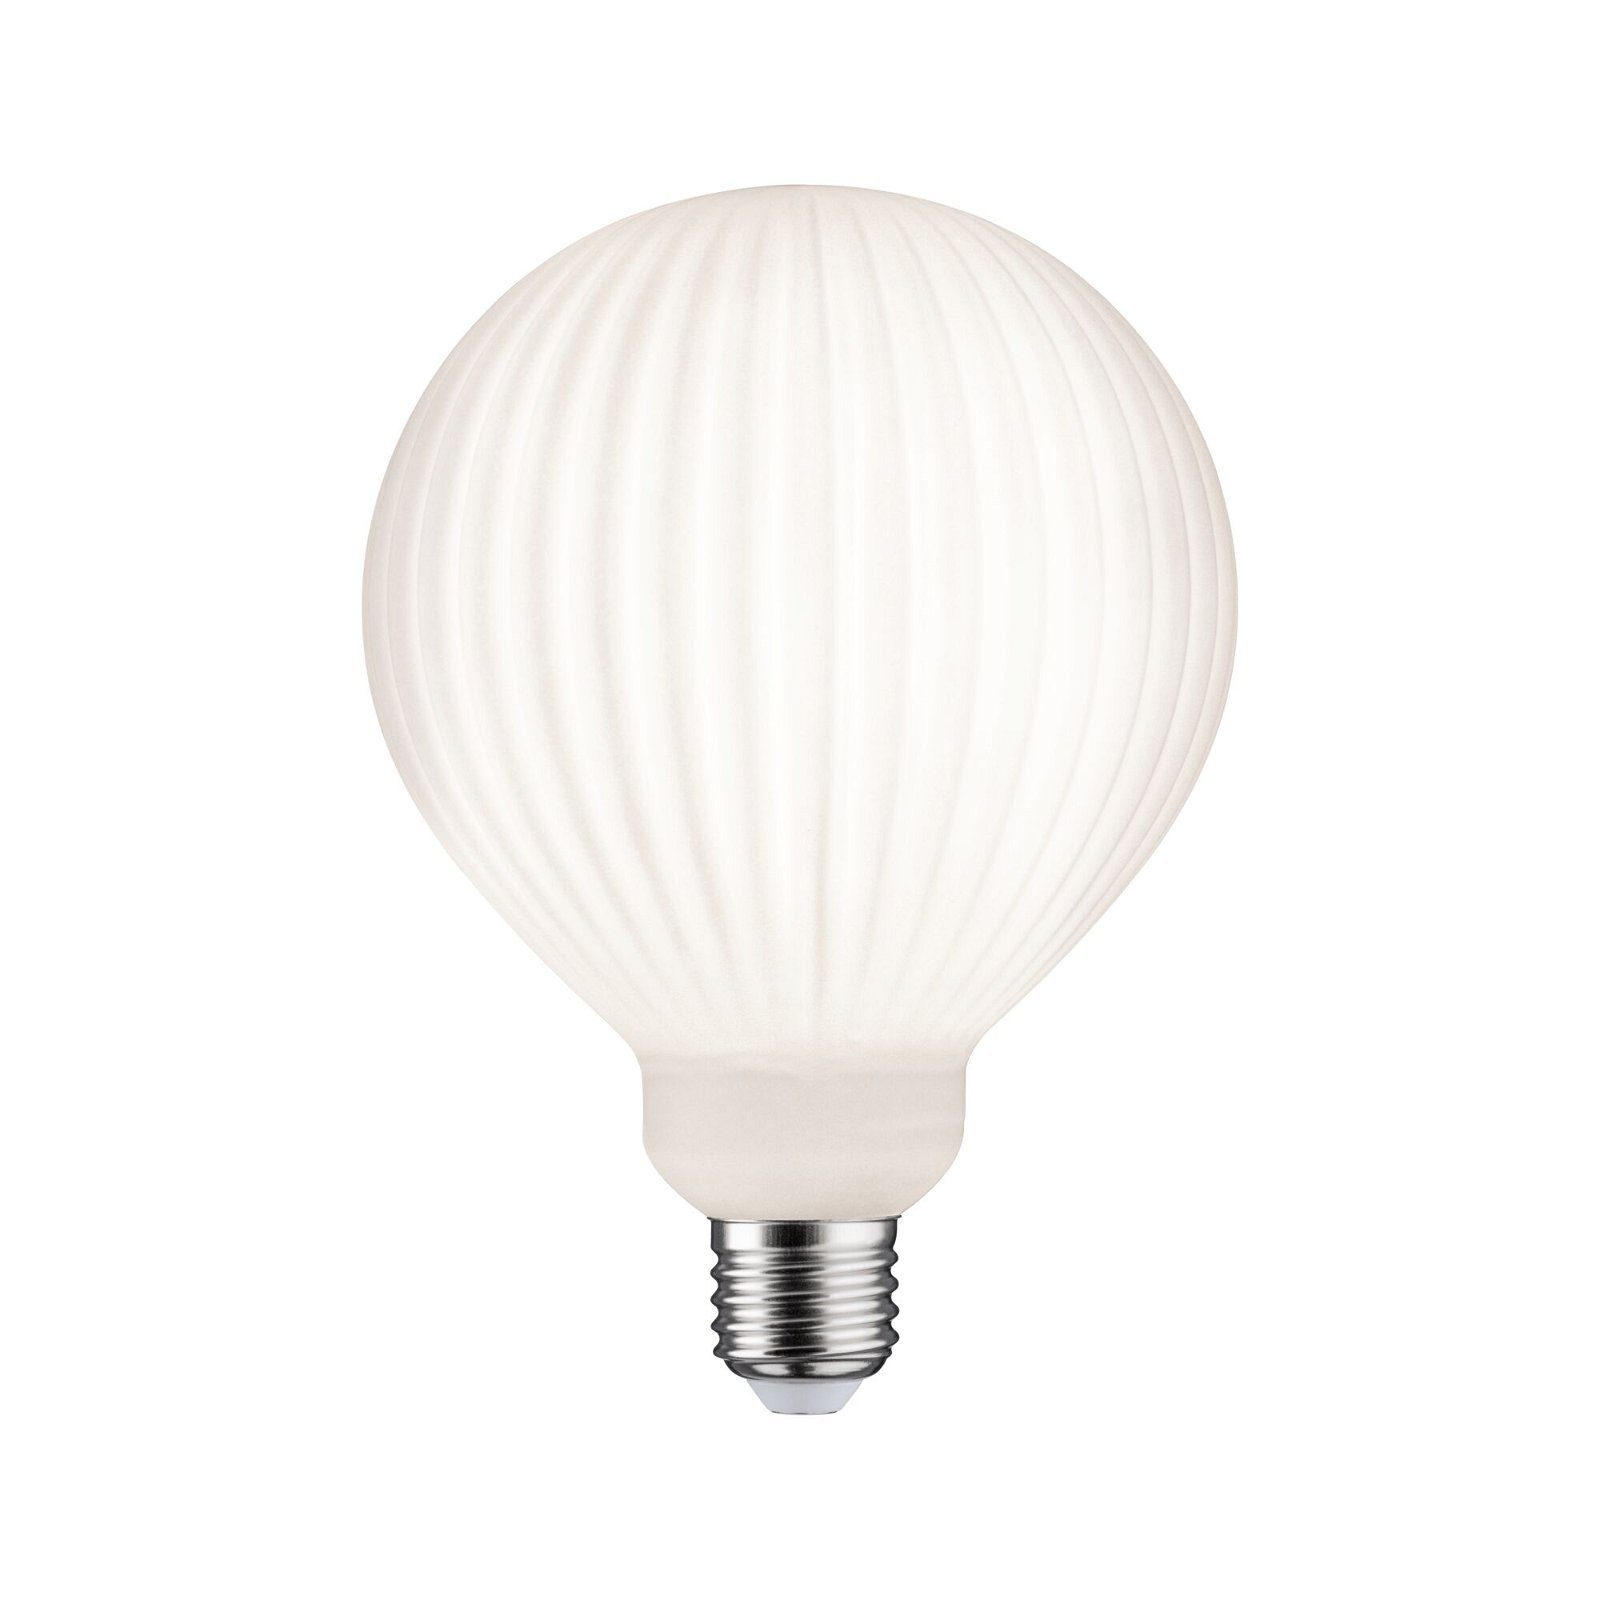 Paulmann LED-Leuchtmittel White G125 Warmweiß V2 3000K 400lm 230V, 4,3W Lampion